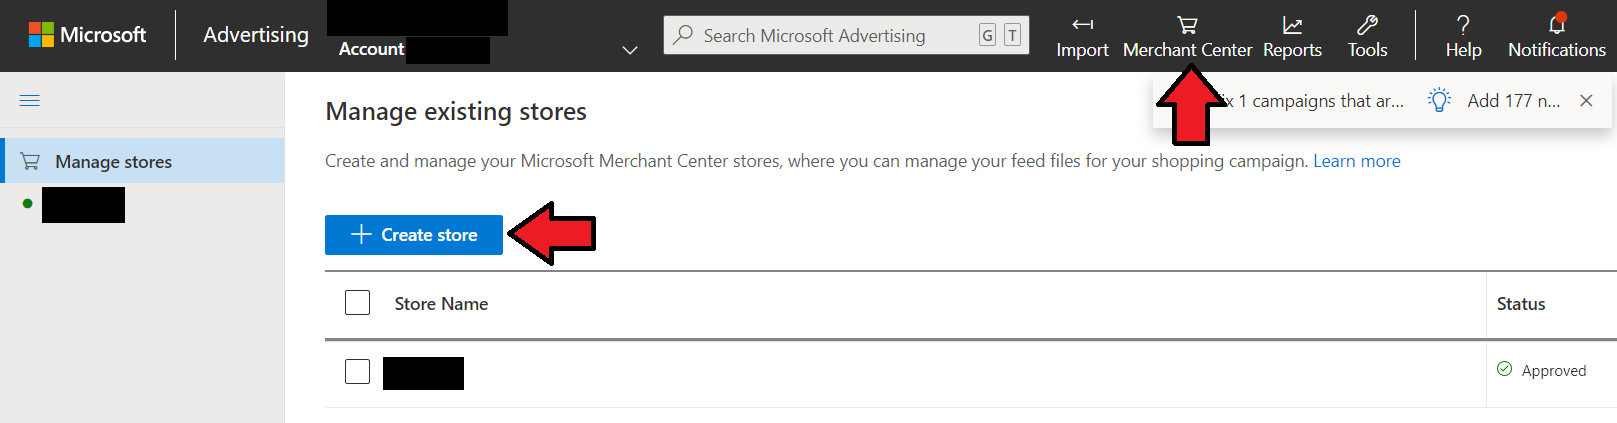 Create a Microsoft Merchant Center Store